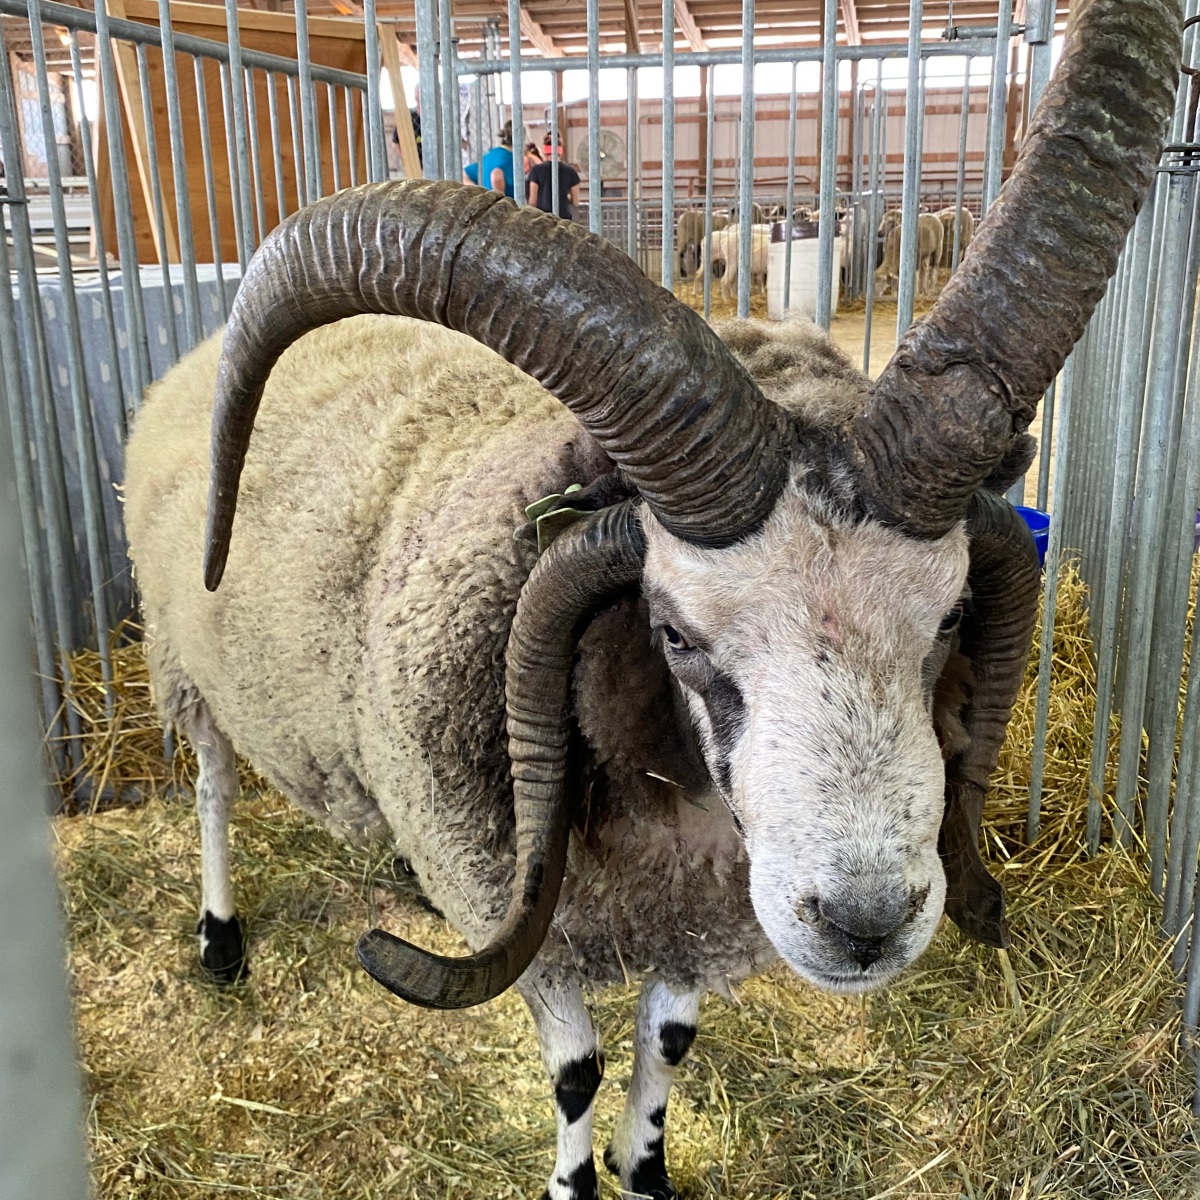 Have you heard of Jacob sheep?